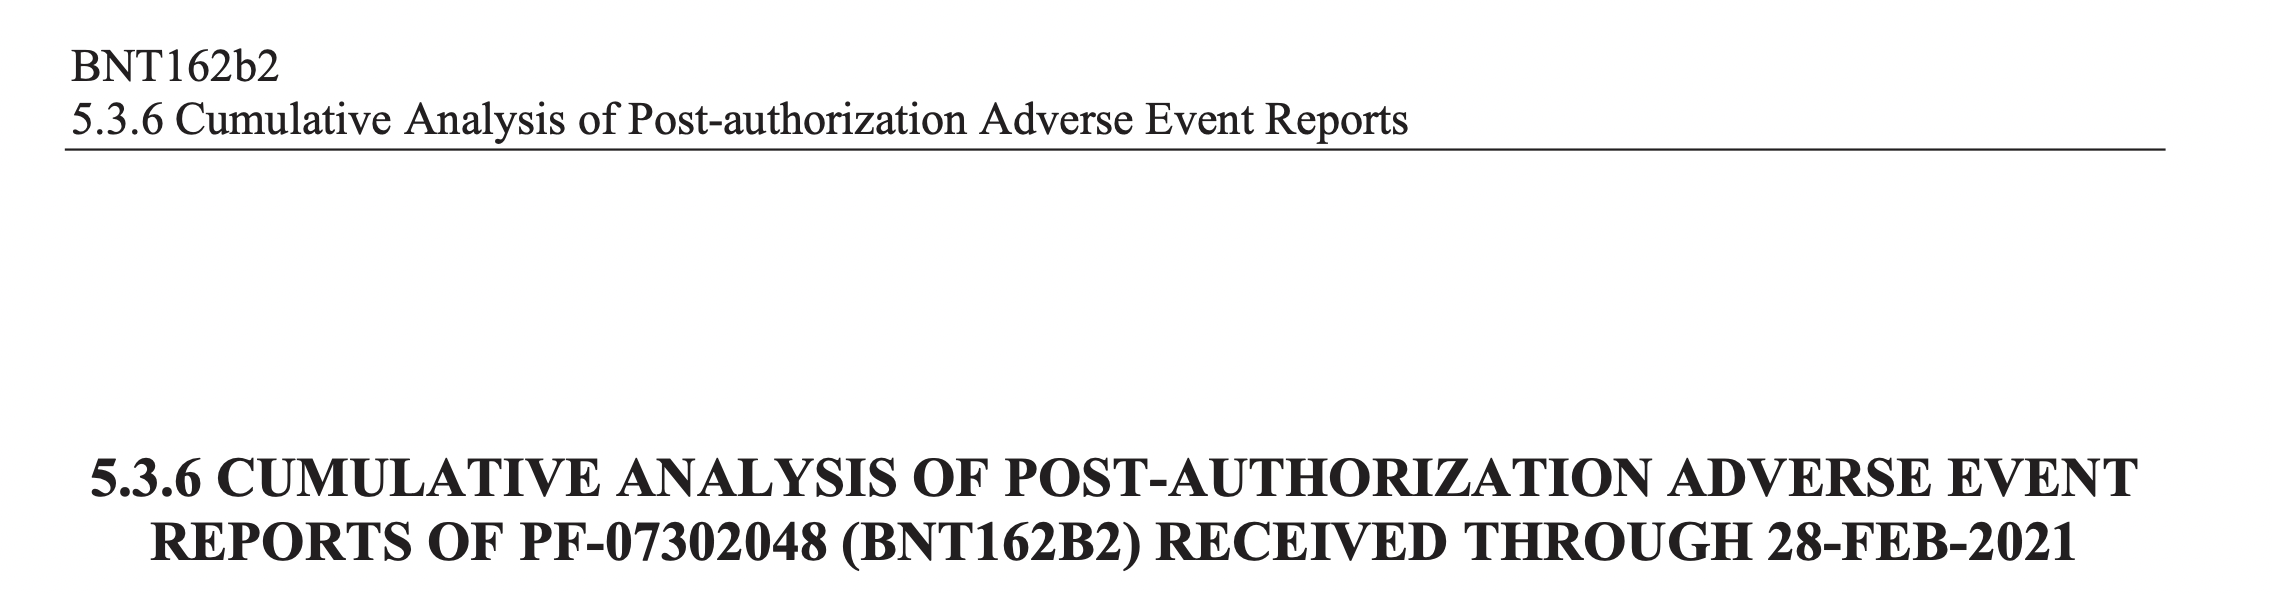 Bombshell Document Dump on Pfizer Vaccine Data - LINK HERE Screen-Shot-2021-12-05-at-17.53.16